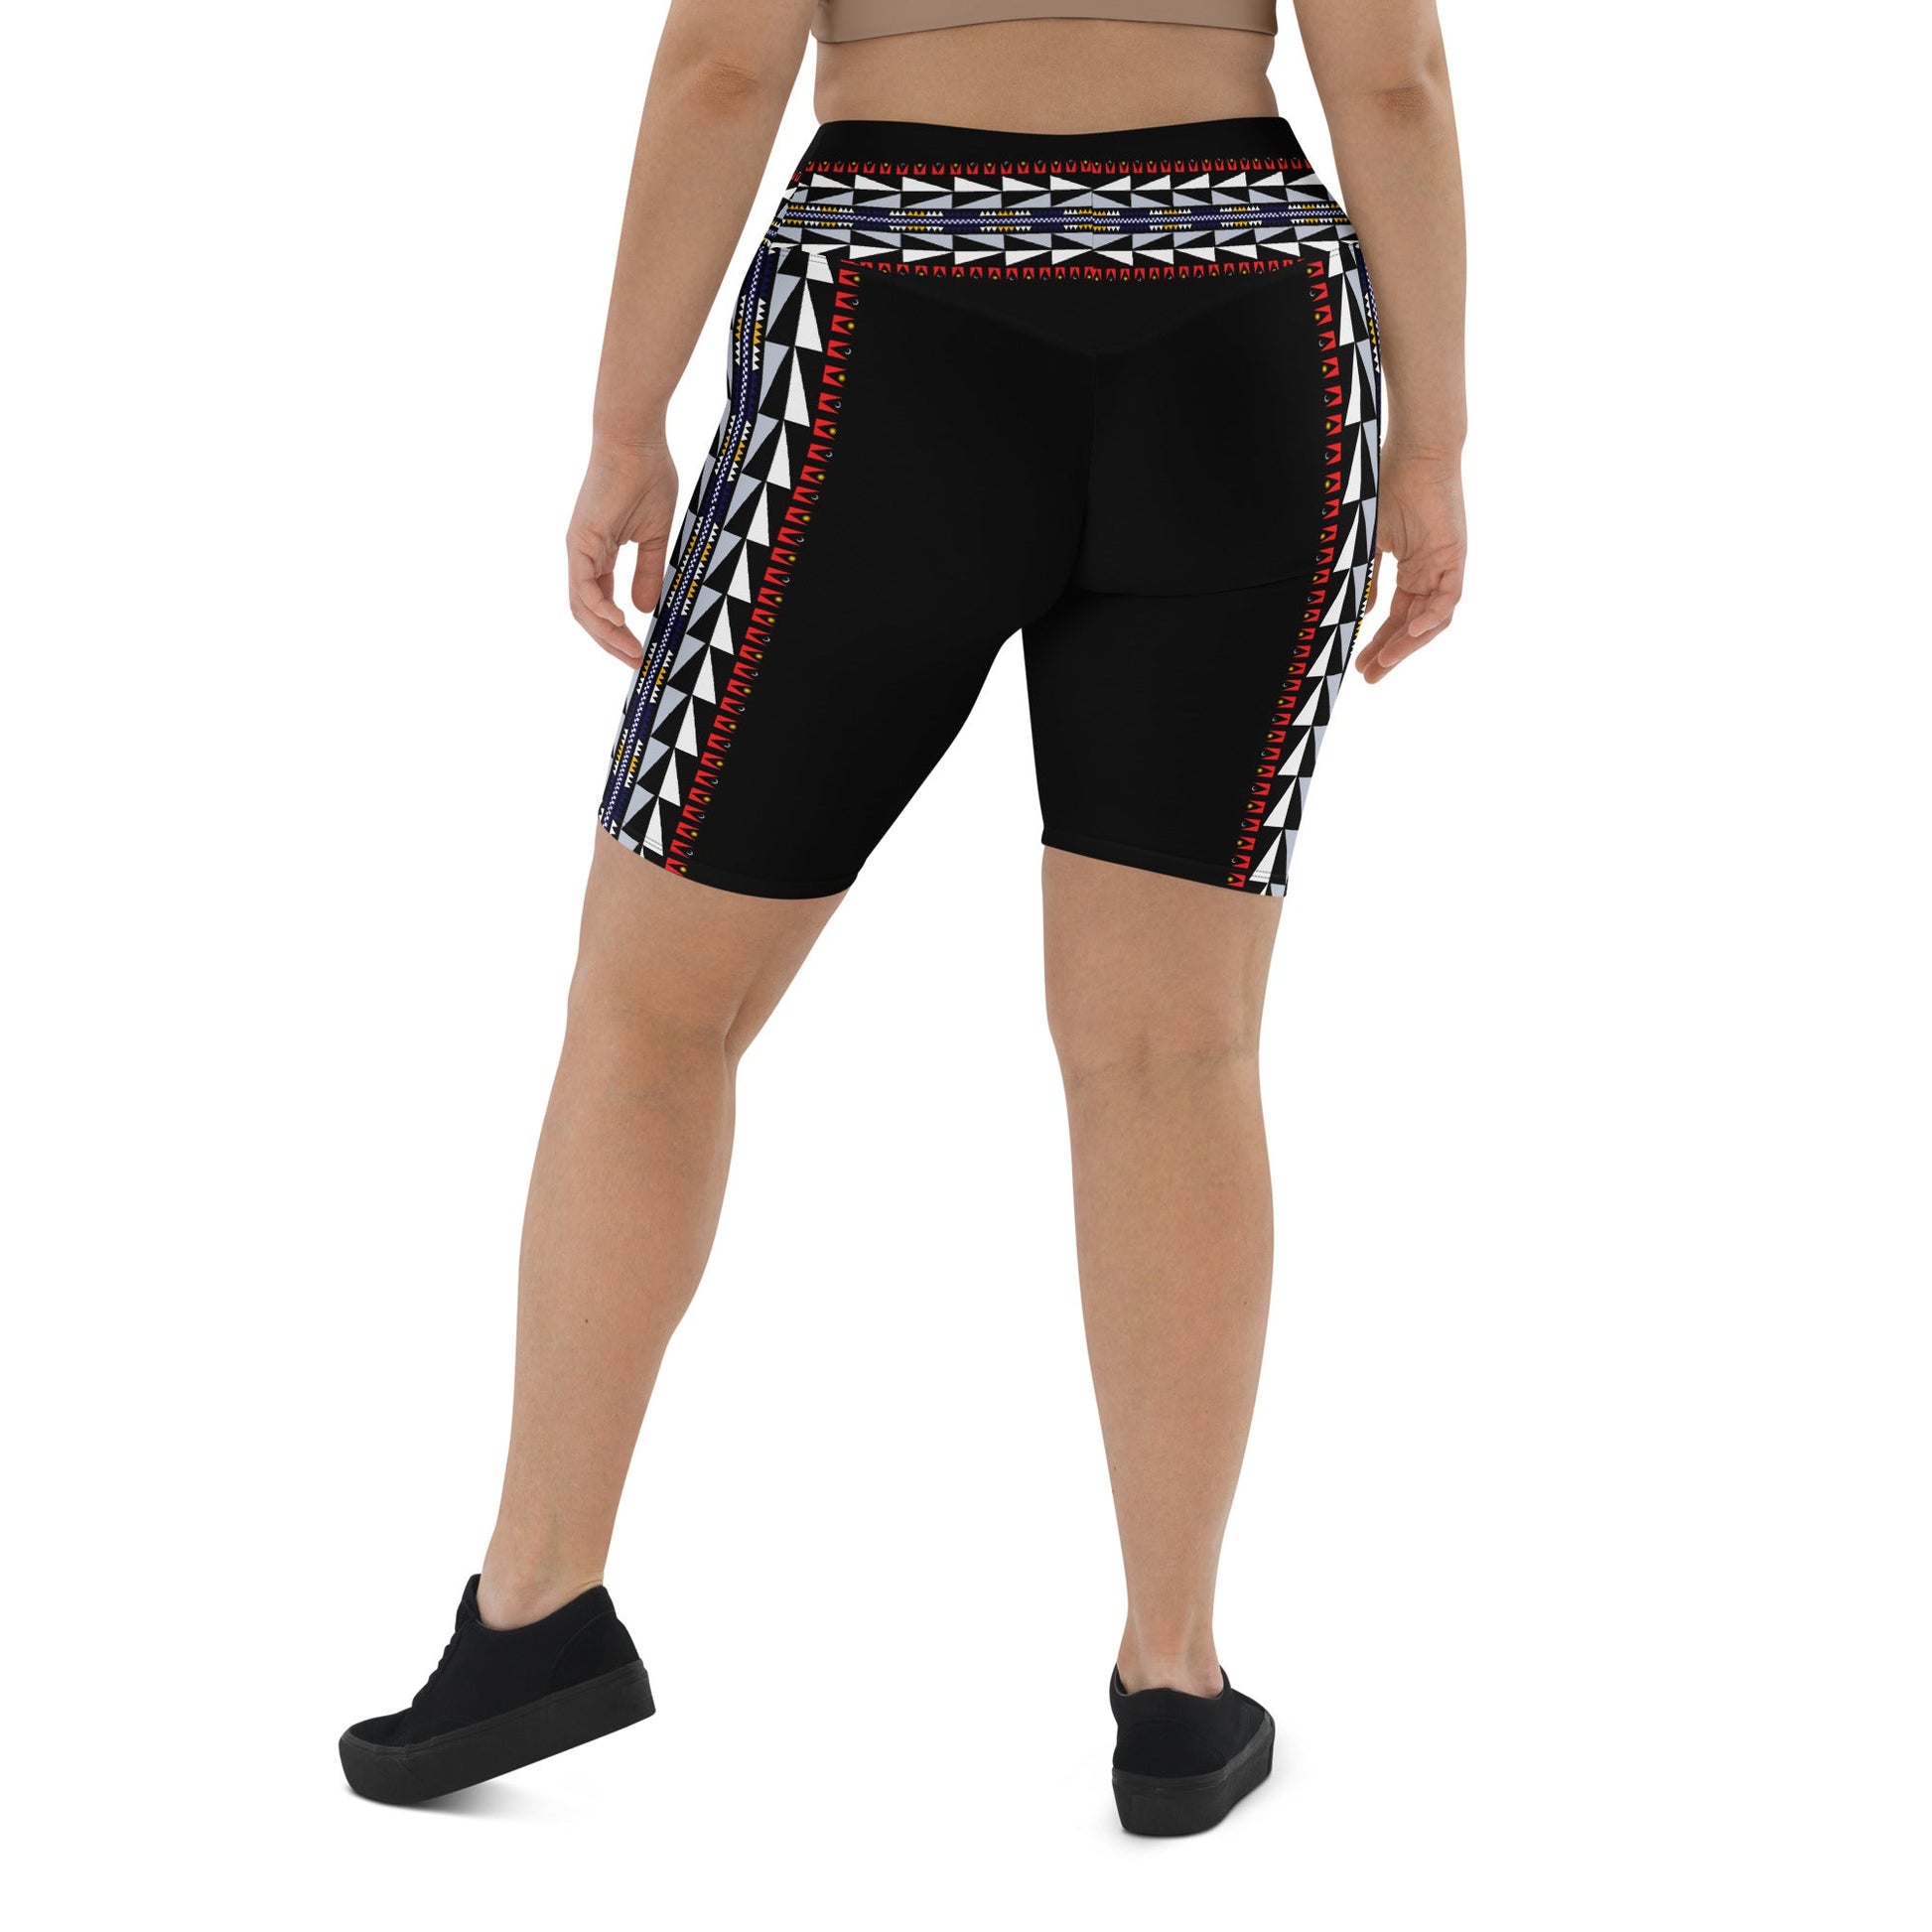 Moon and Sun Biker Shorts Plus - Nikikw Designs